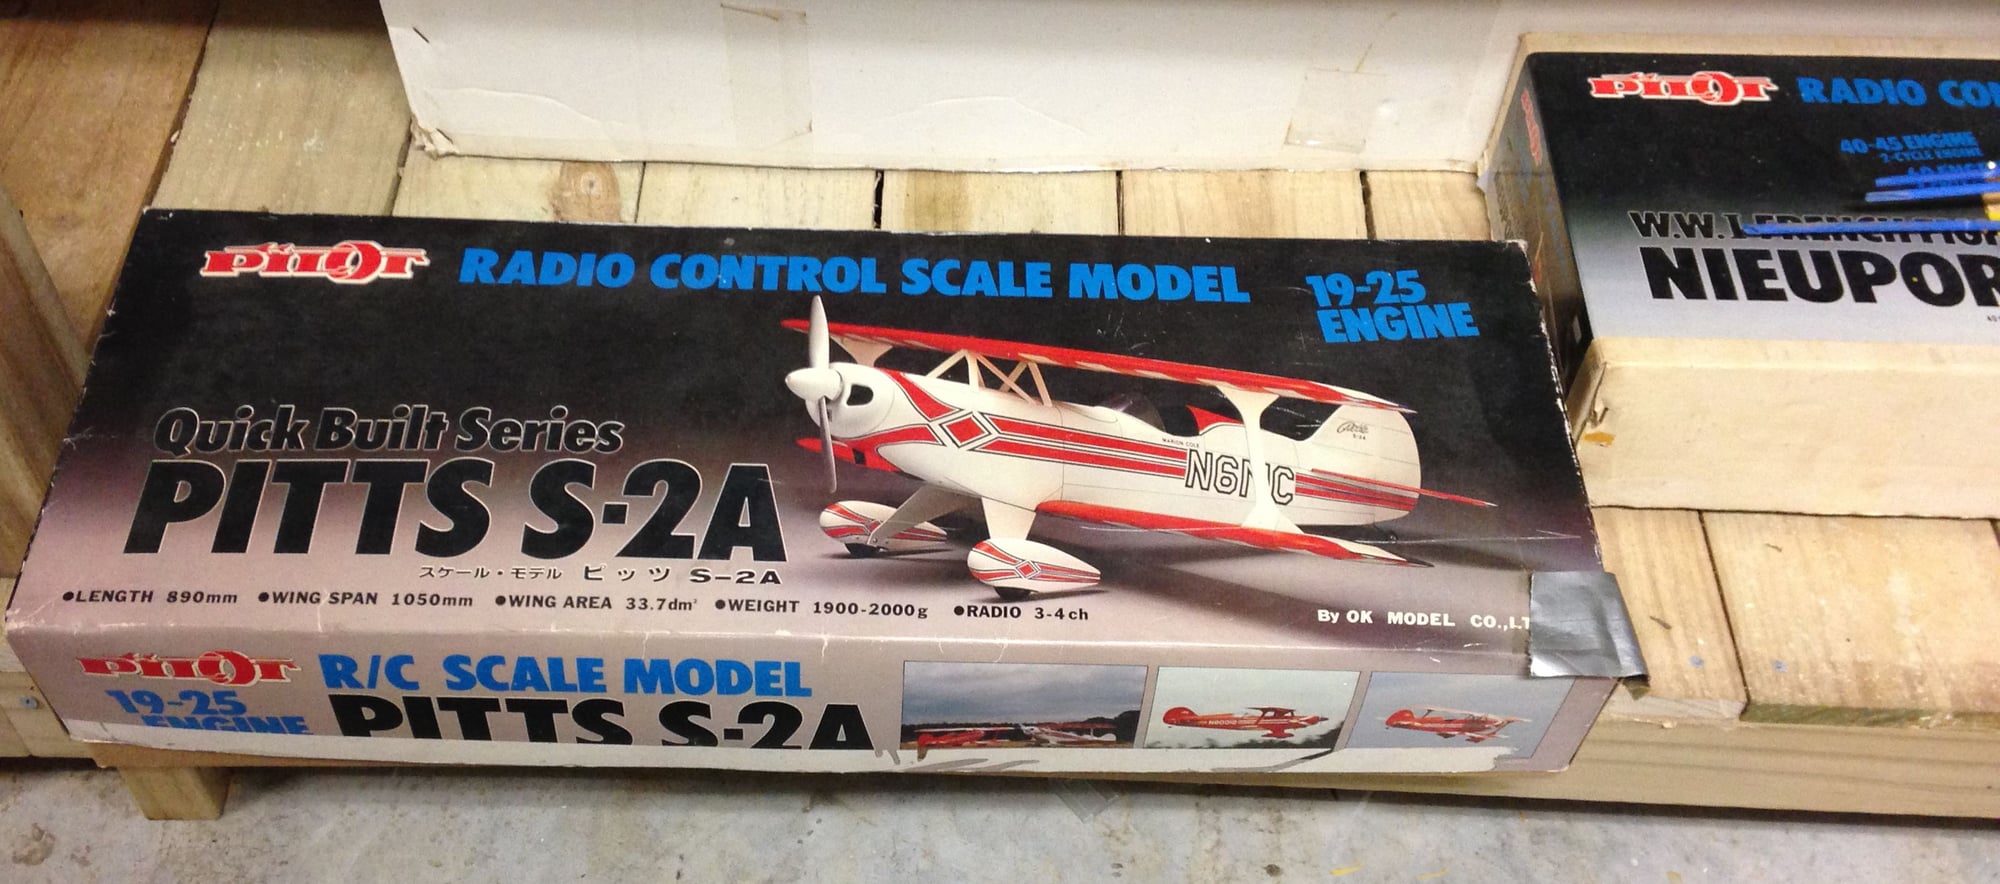 Pilot Kit Pitts S2-A (19-25) size NIB For Sale July - RCU Forums